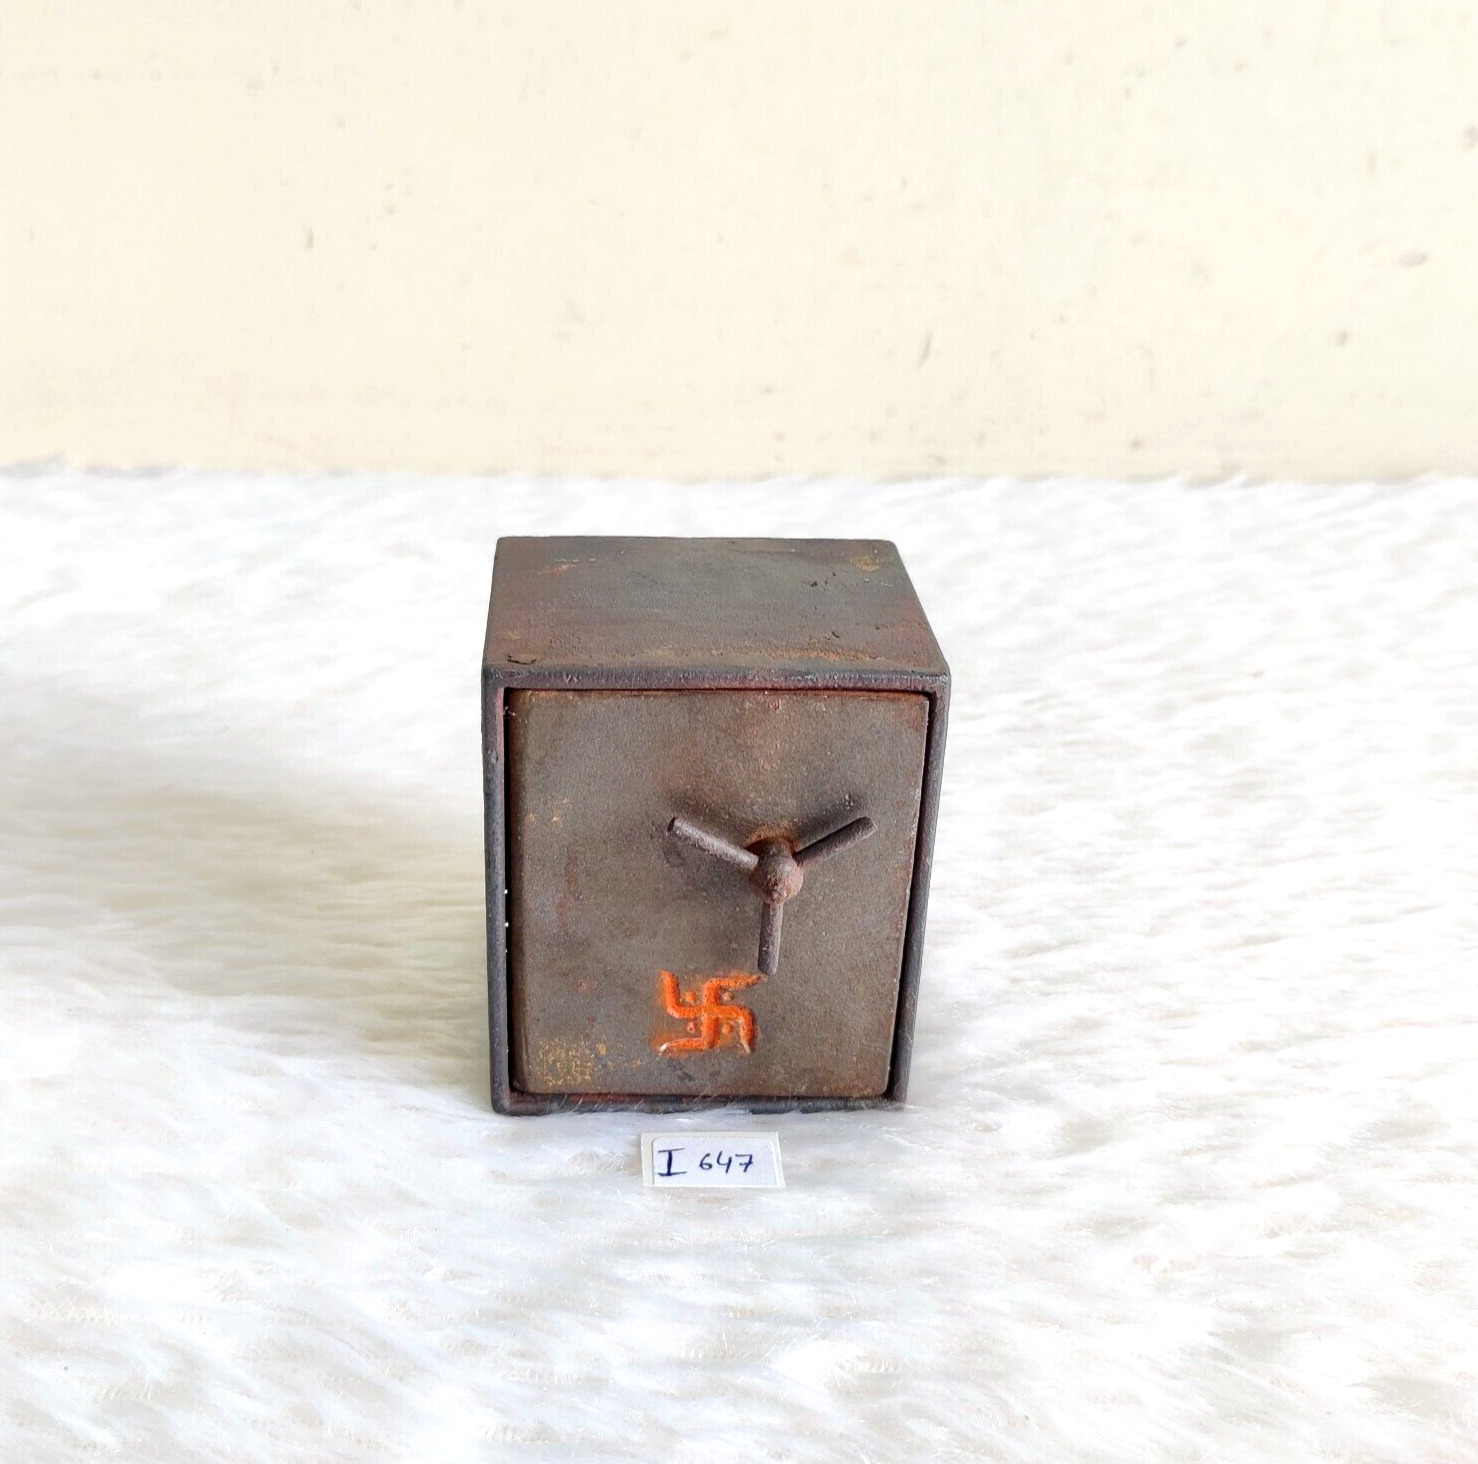 19c Antique Miniature Iron Safe Treasure Money Box Rare Old Collectible I647